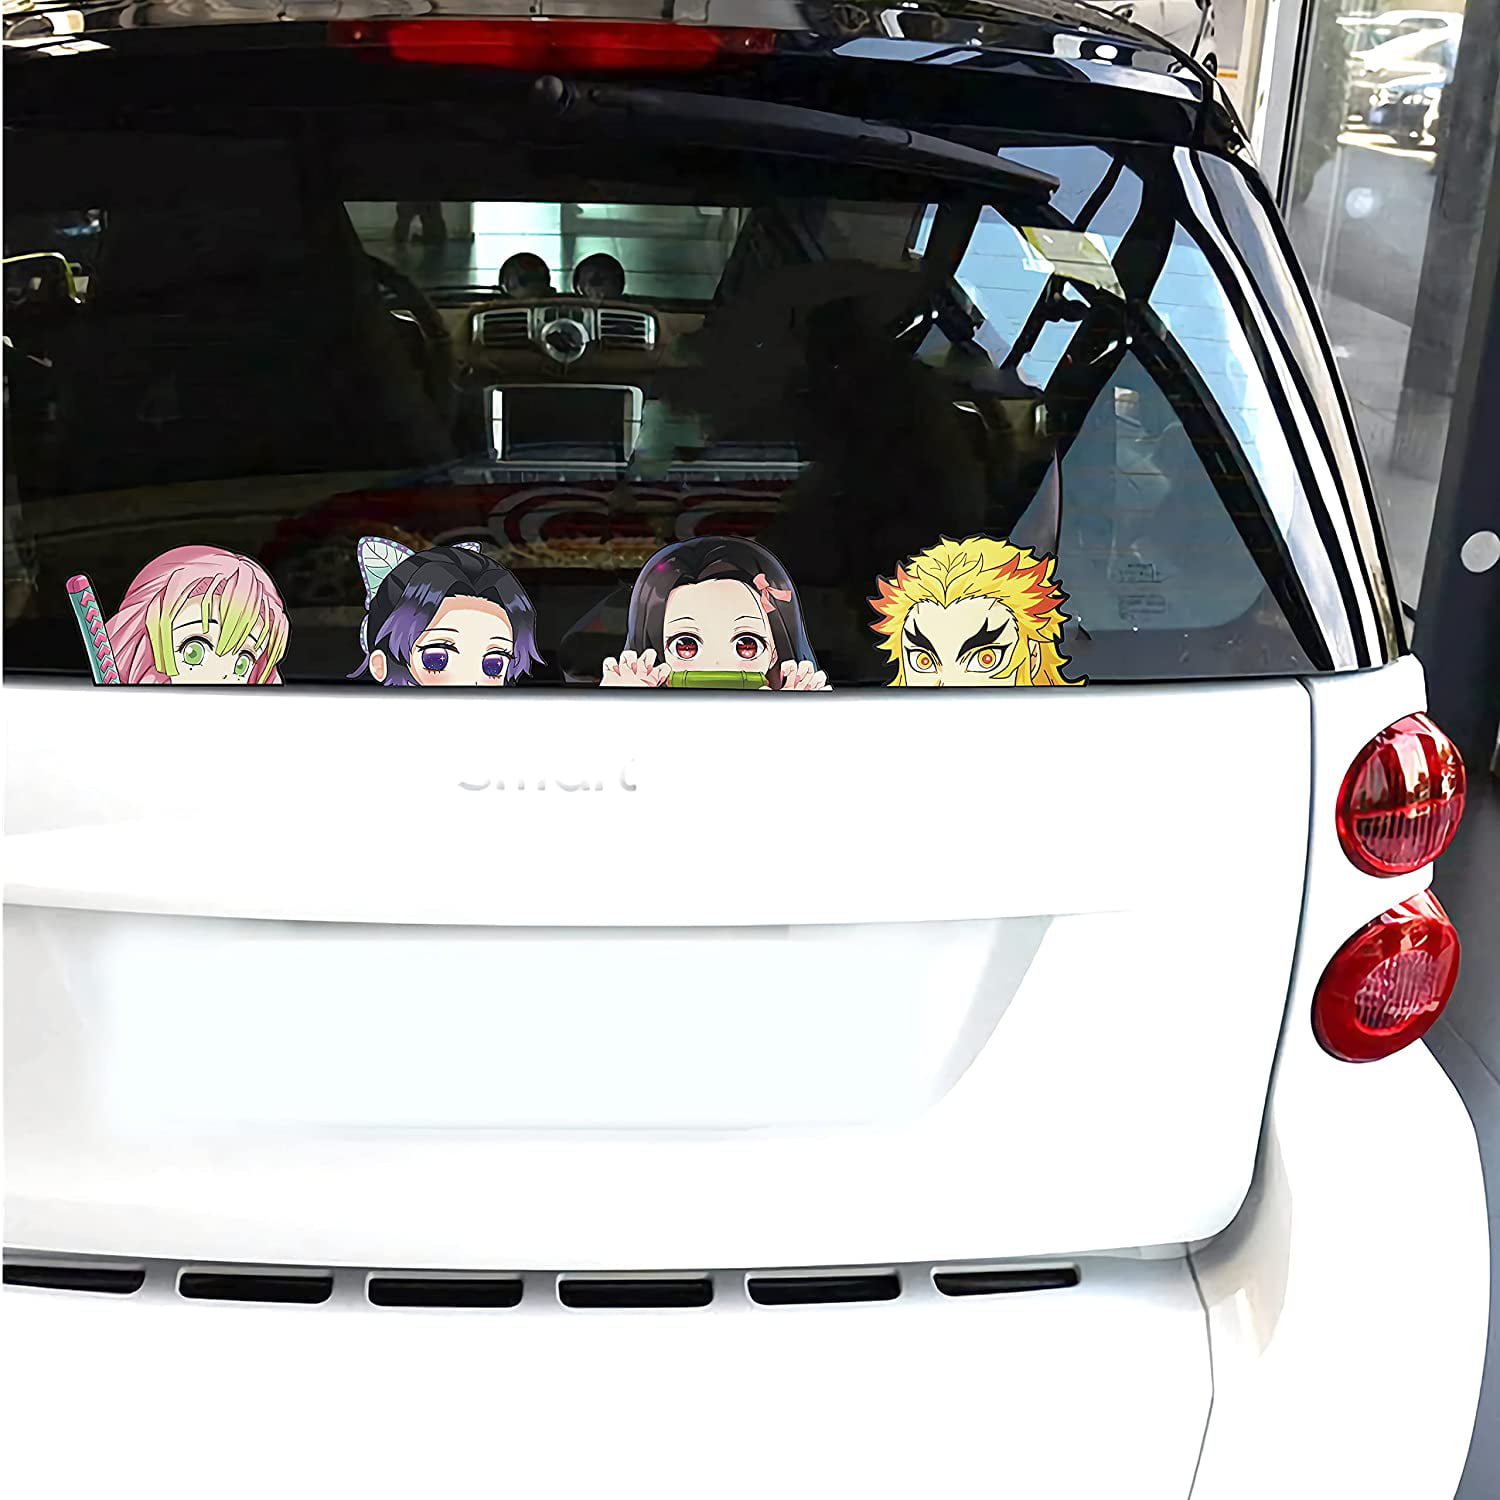  Demon Slayer Tanjirou Car Stickers, 3.5'' x 5.5'' Vinyl Anime  Car Decal, Waterproof Cartoon Sticker for Bumper, Laptop, Skateboard, etc.